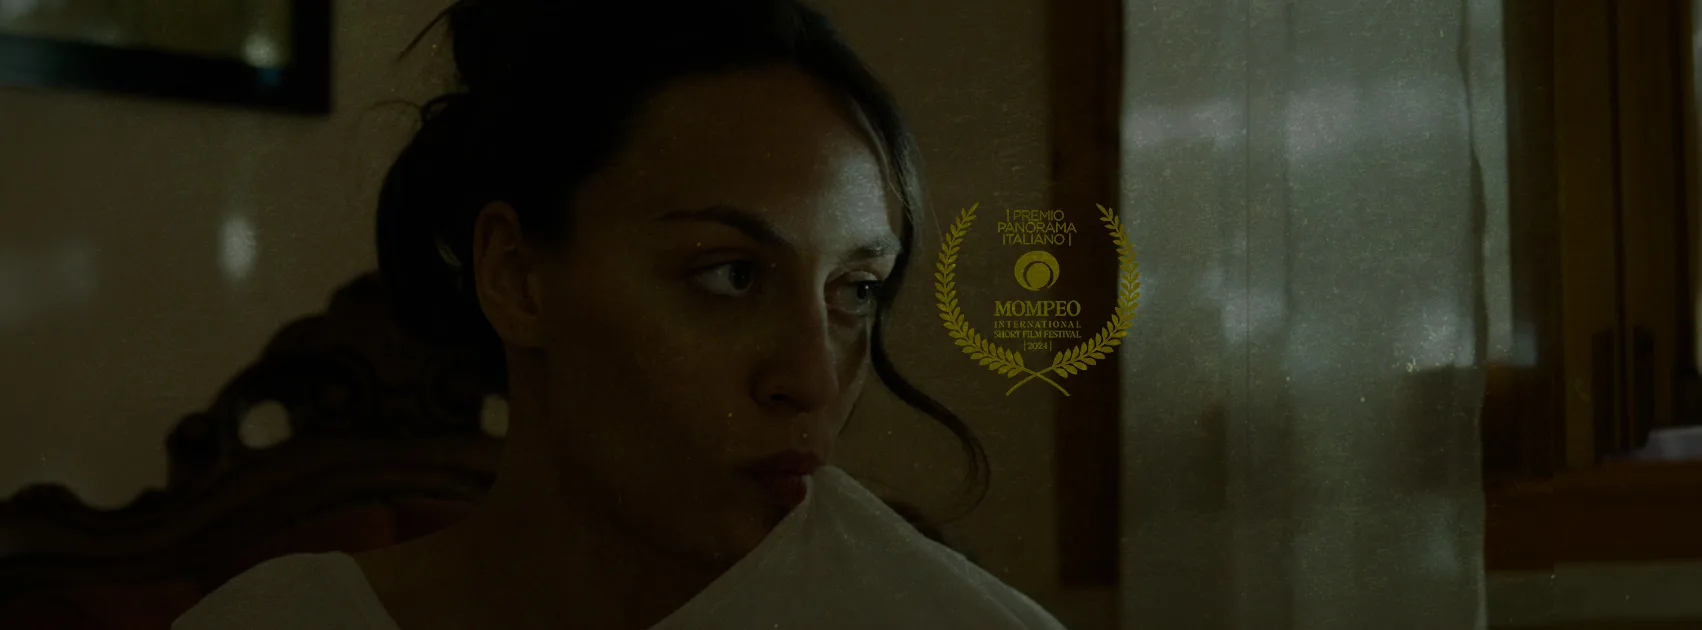 The short film "The stolen embrace" by Simone Gazzola won at Mompeo International Short Film Festival